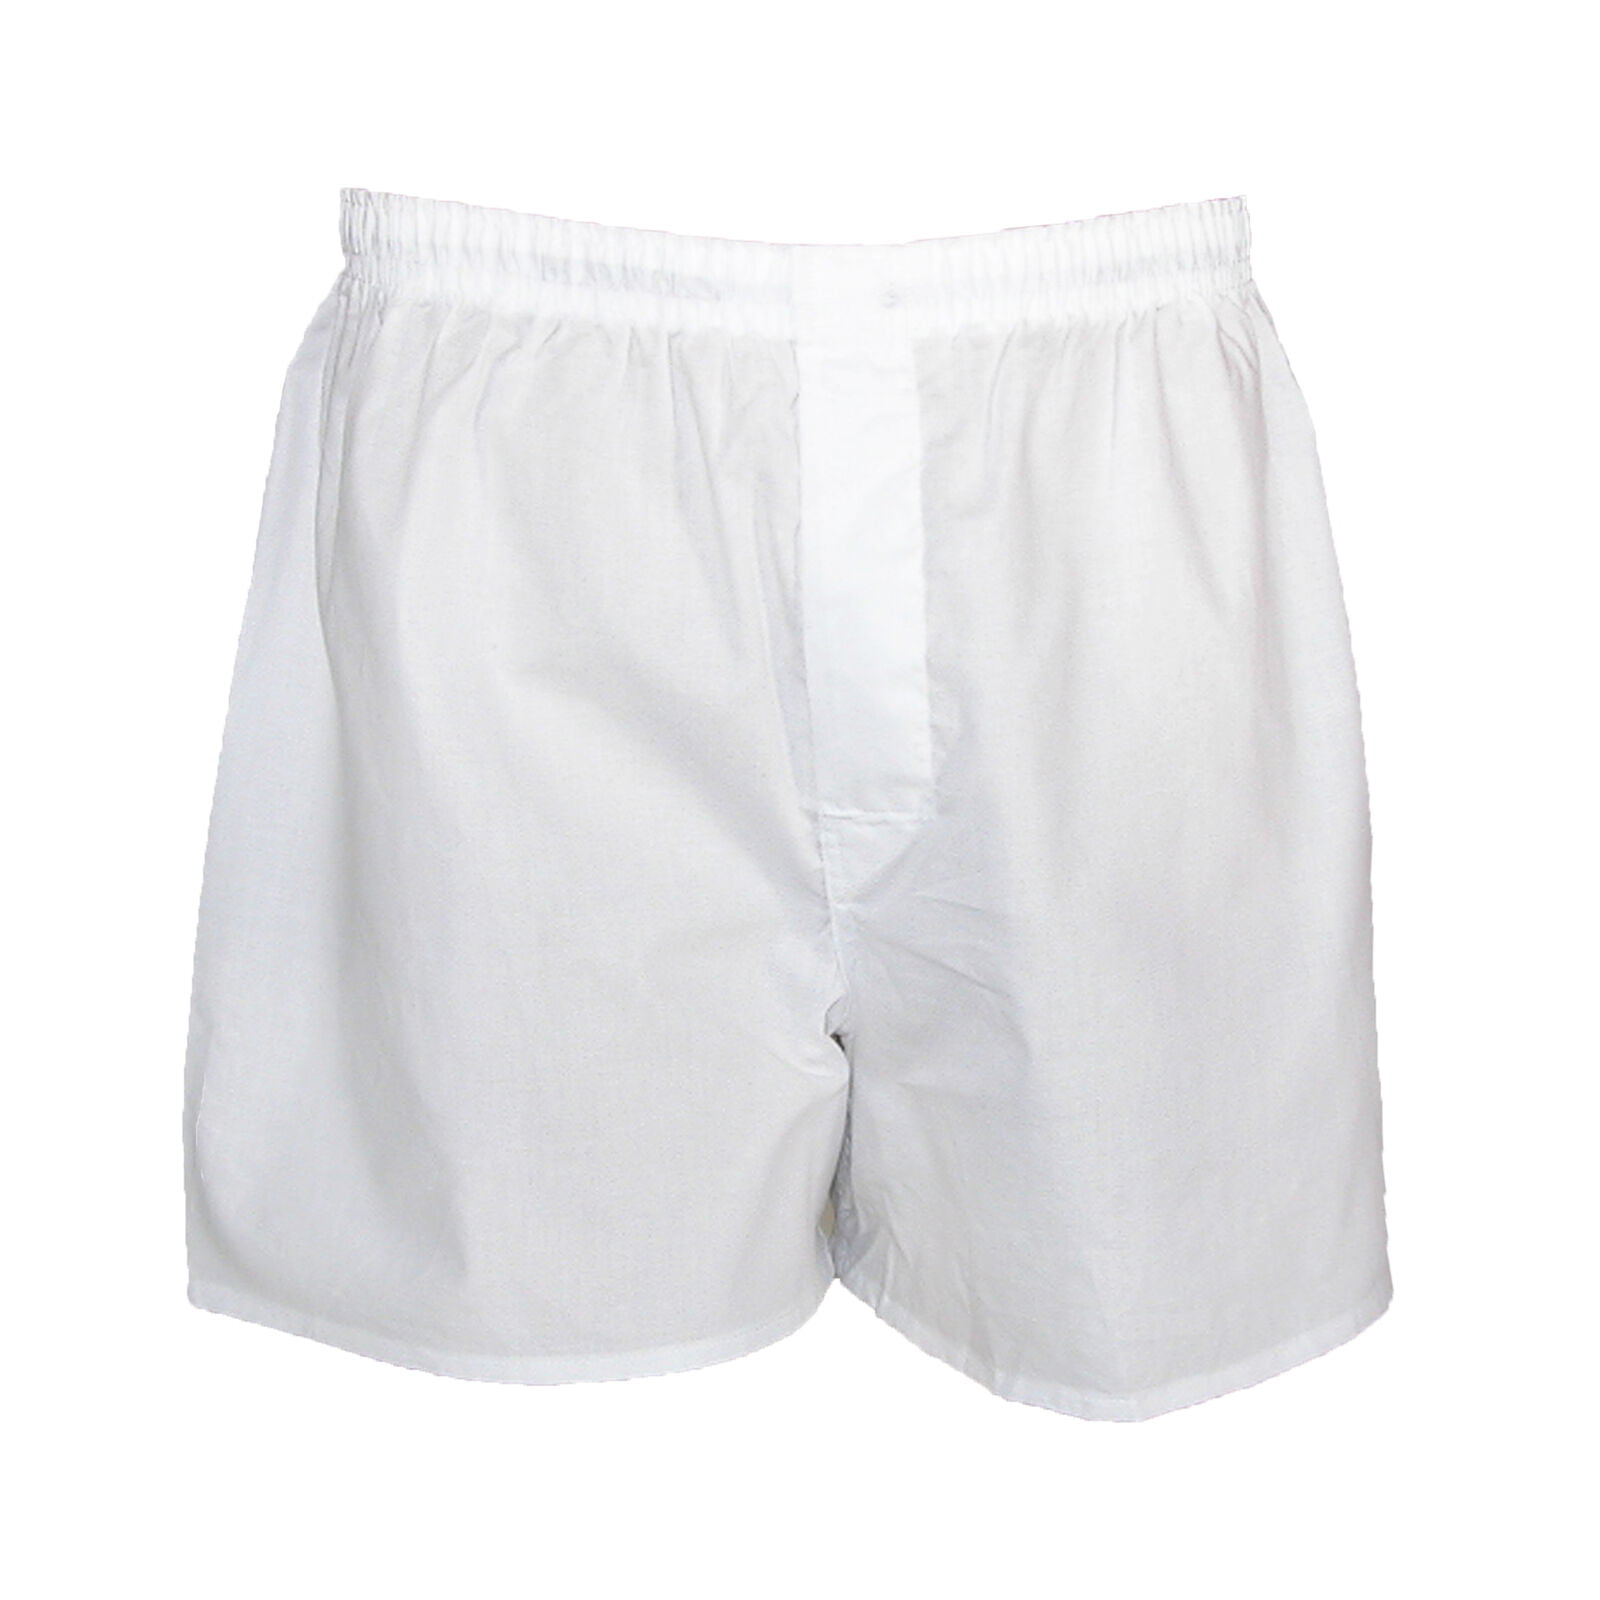 3-12 PACK Men's White Boxer Shorts W/ Comfortable Flex Waistband (White, M,  12 Pack) 